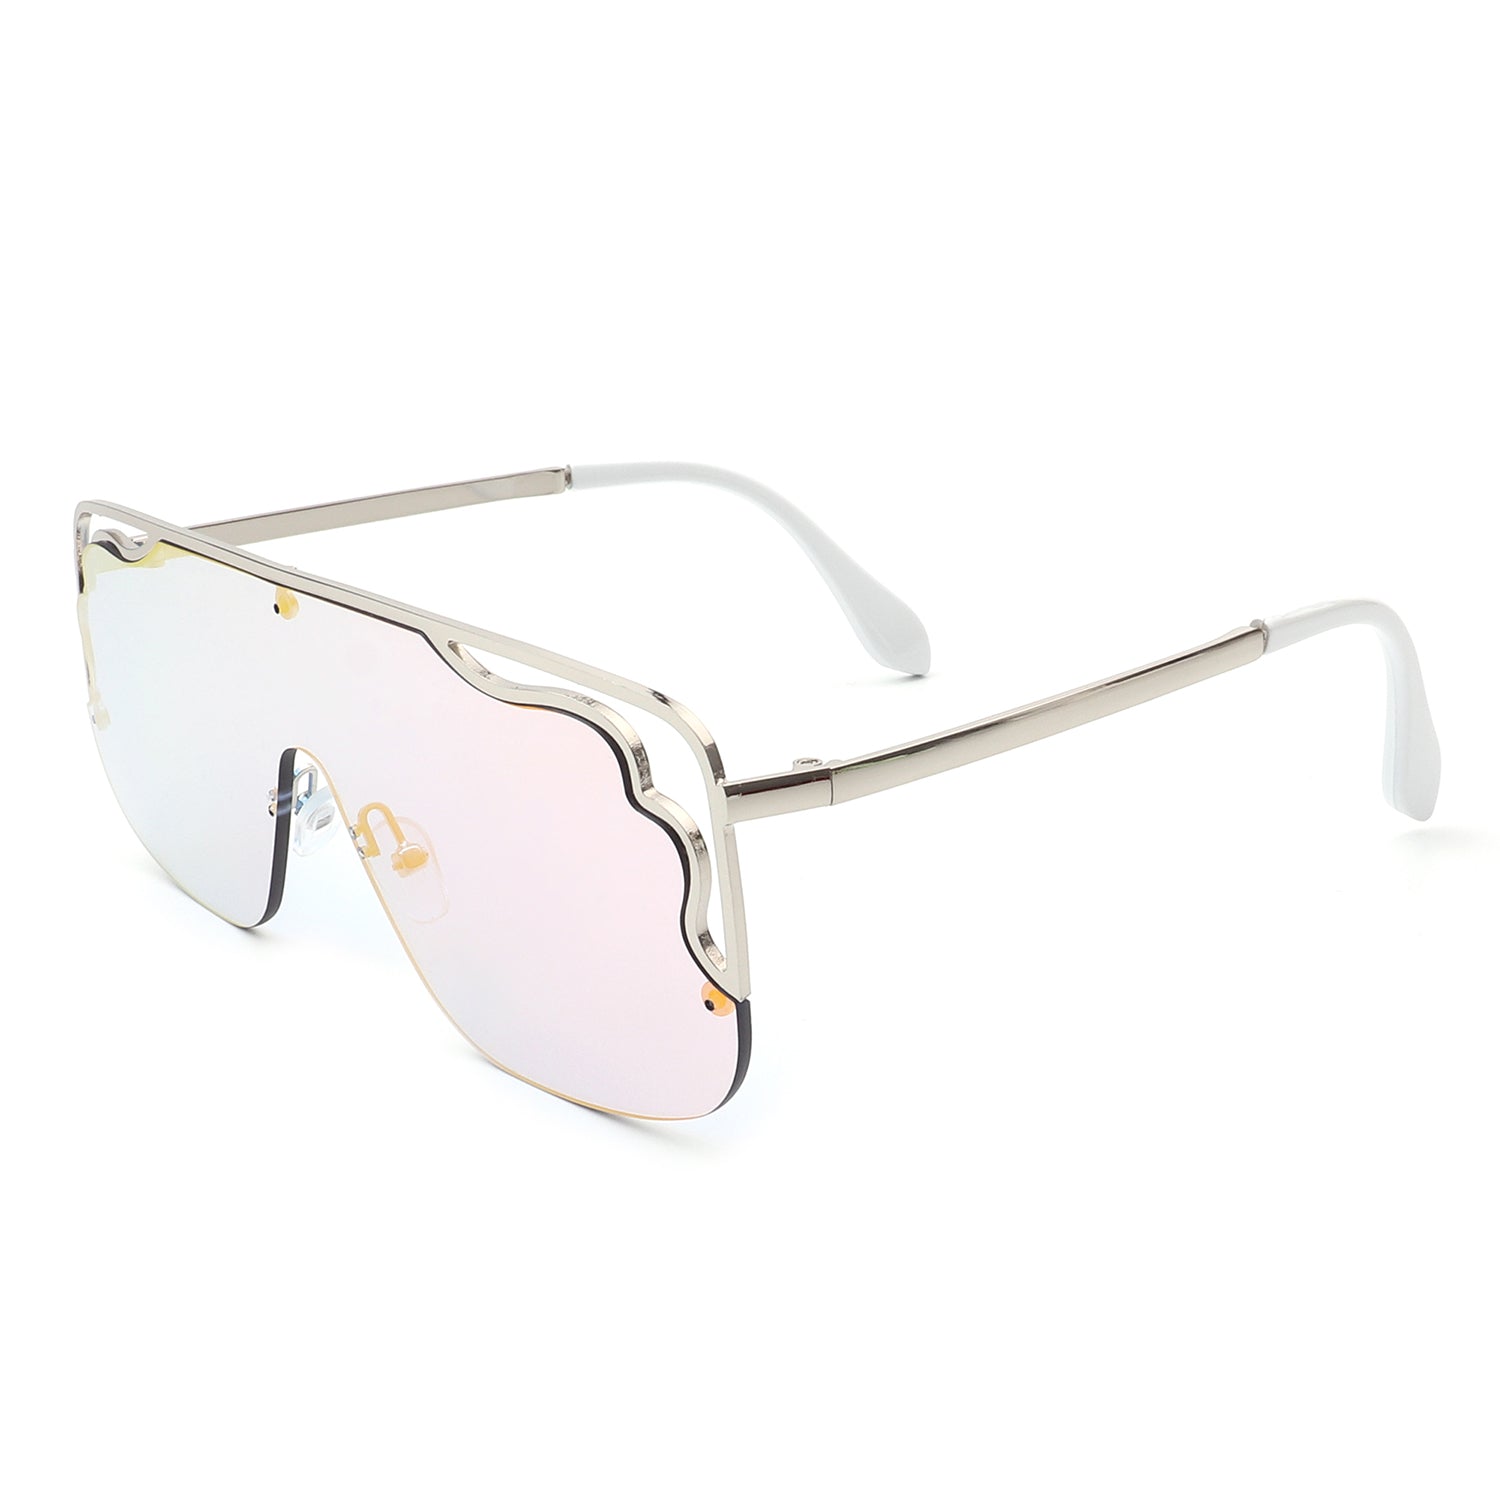 HJ3006 - Square Half Frame Aviator Designer Fashion Sunglasses